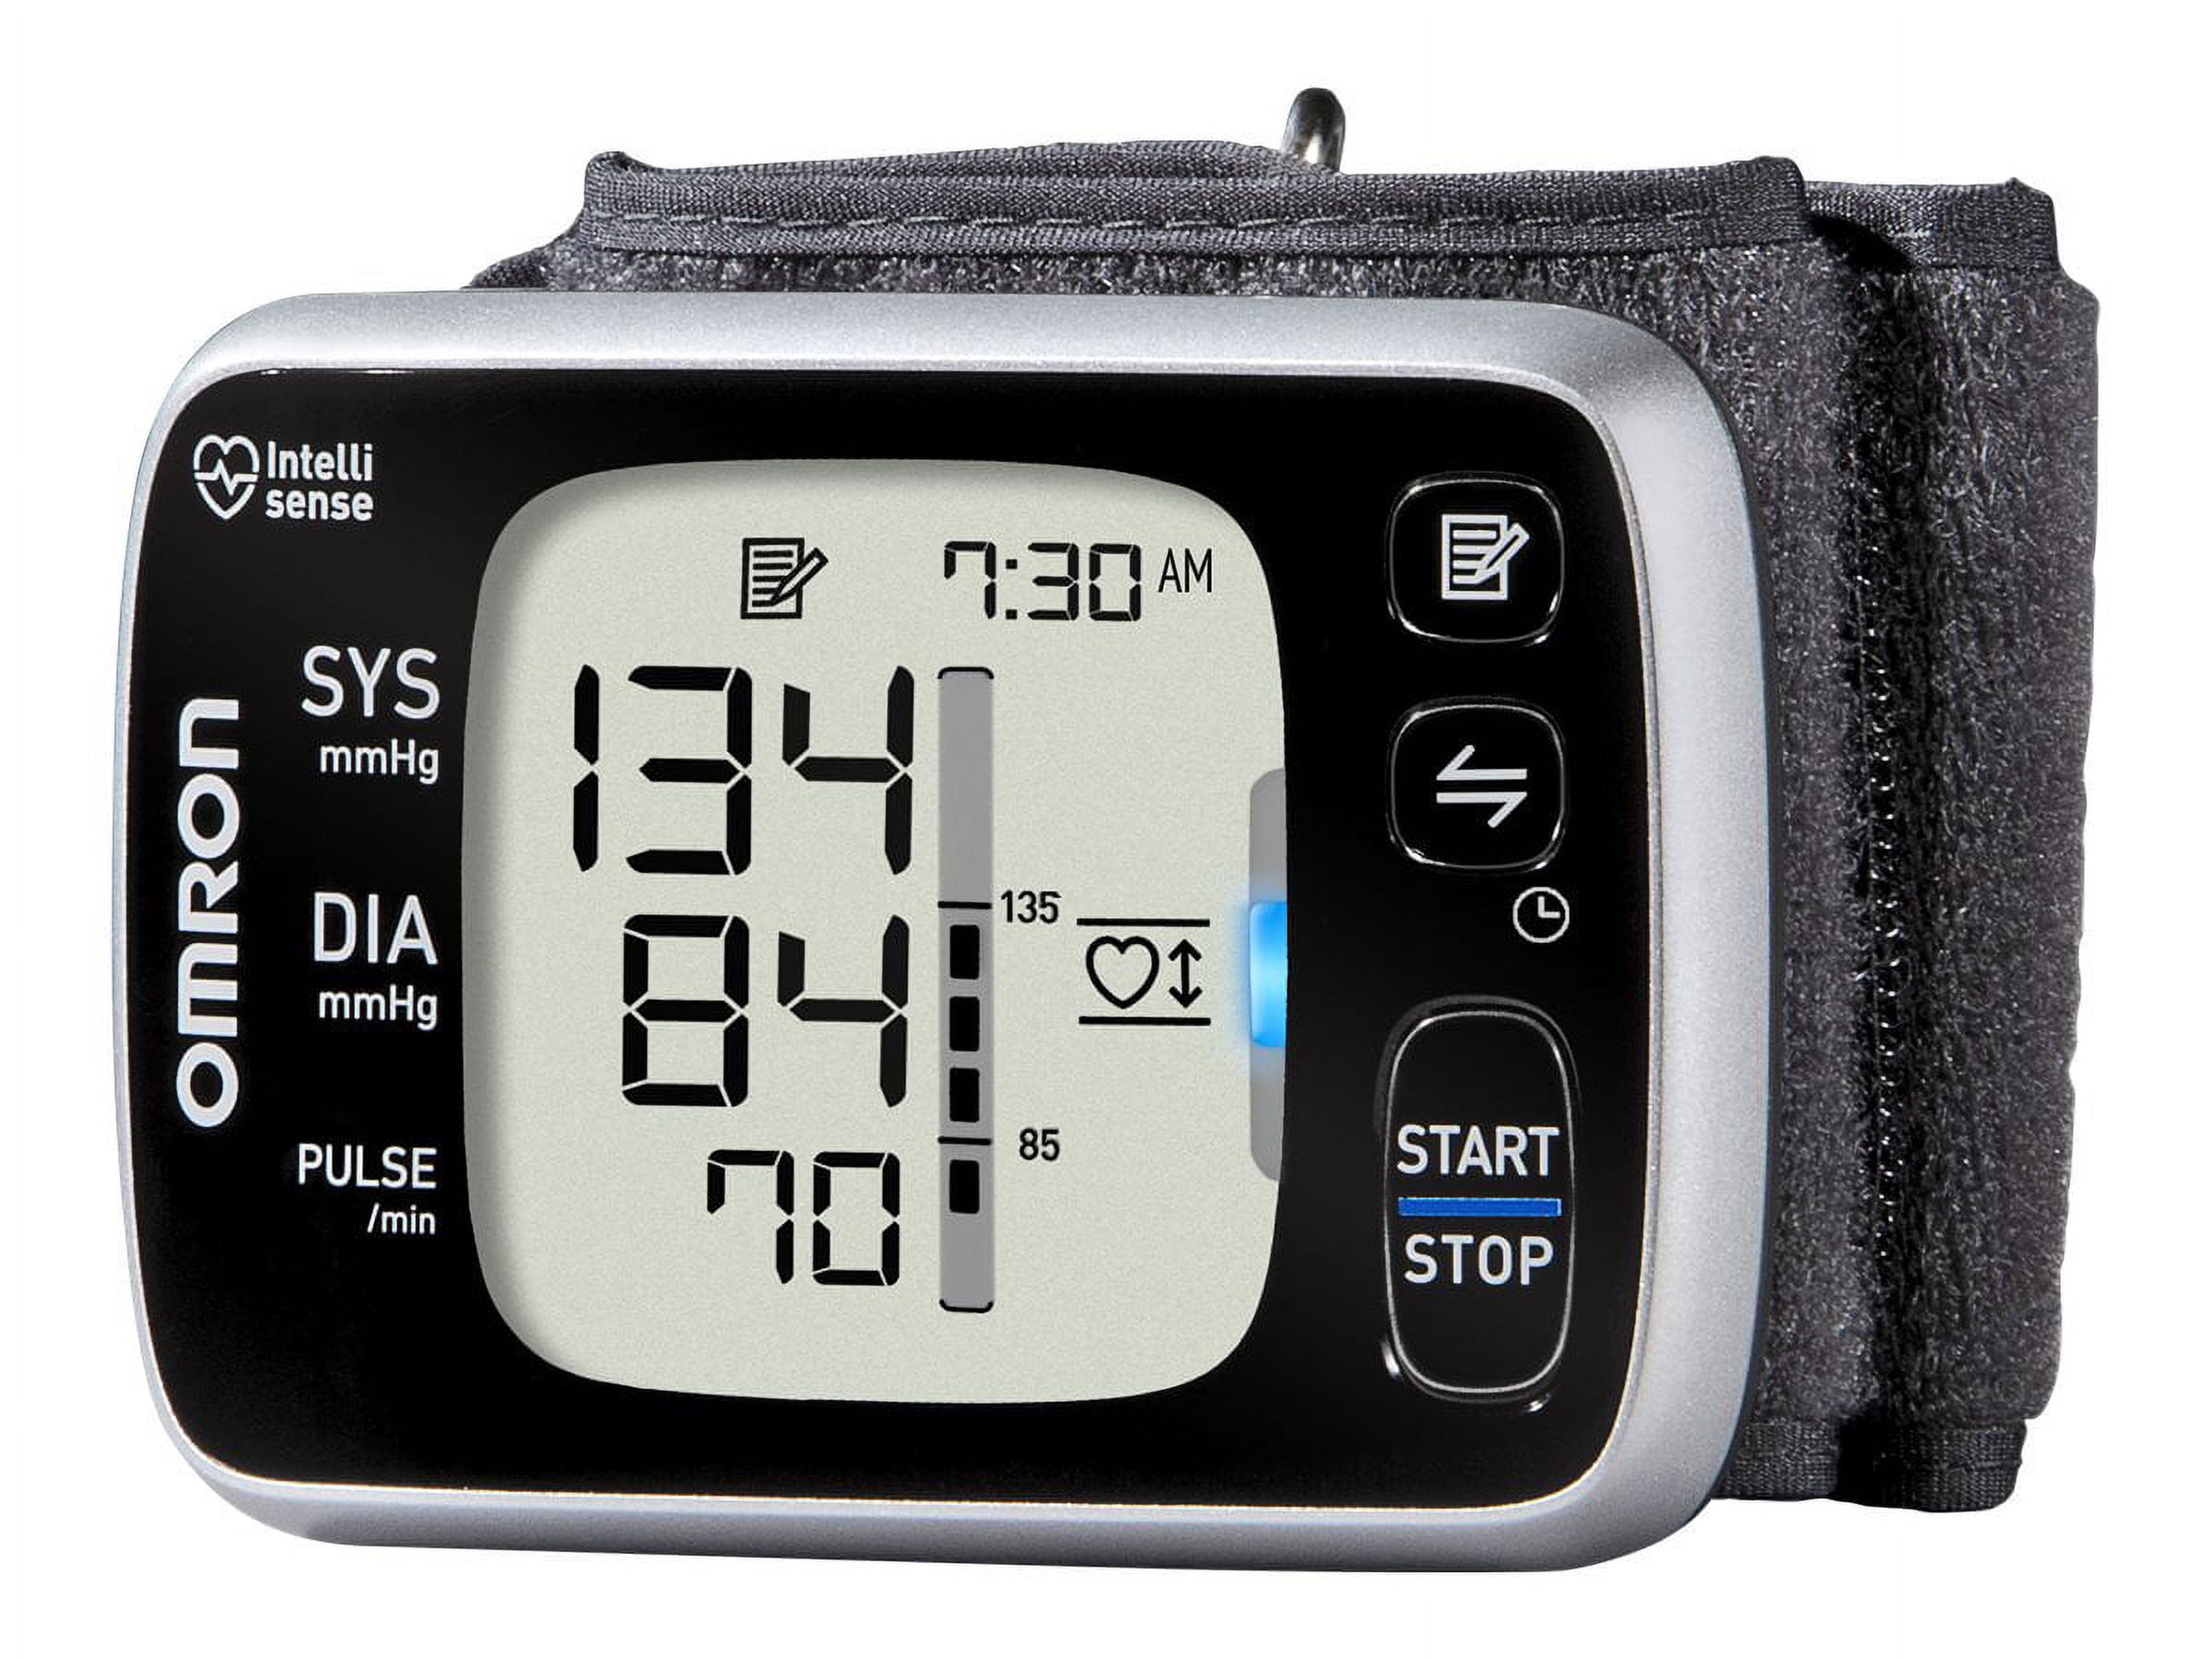 Omron 10 Series Wireless Wrist Blood Pressure Monitor